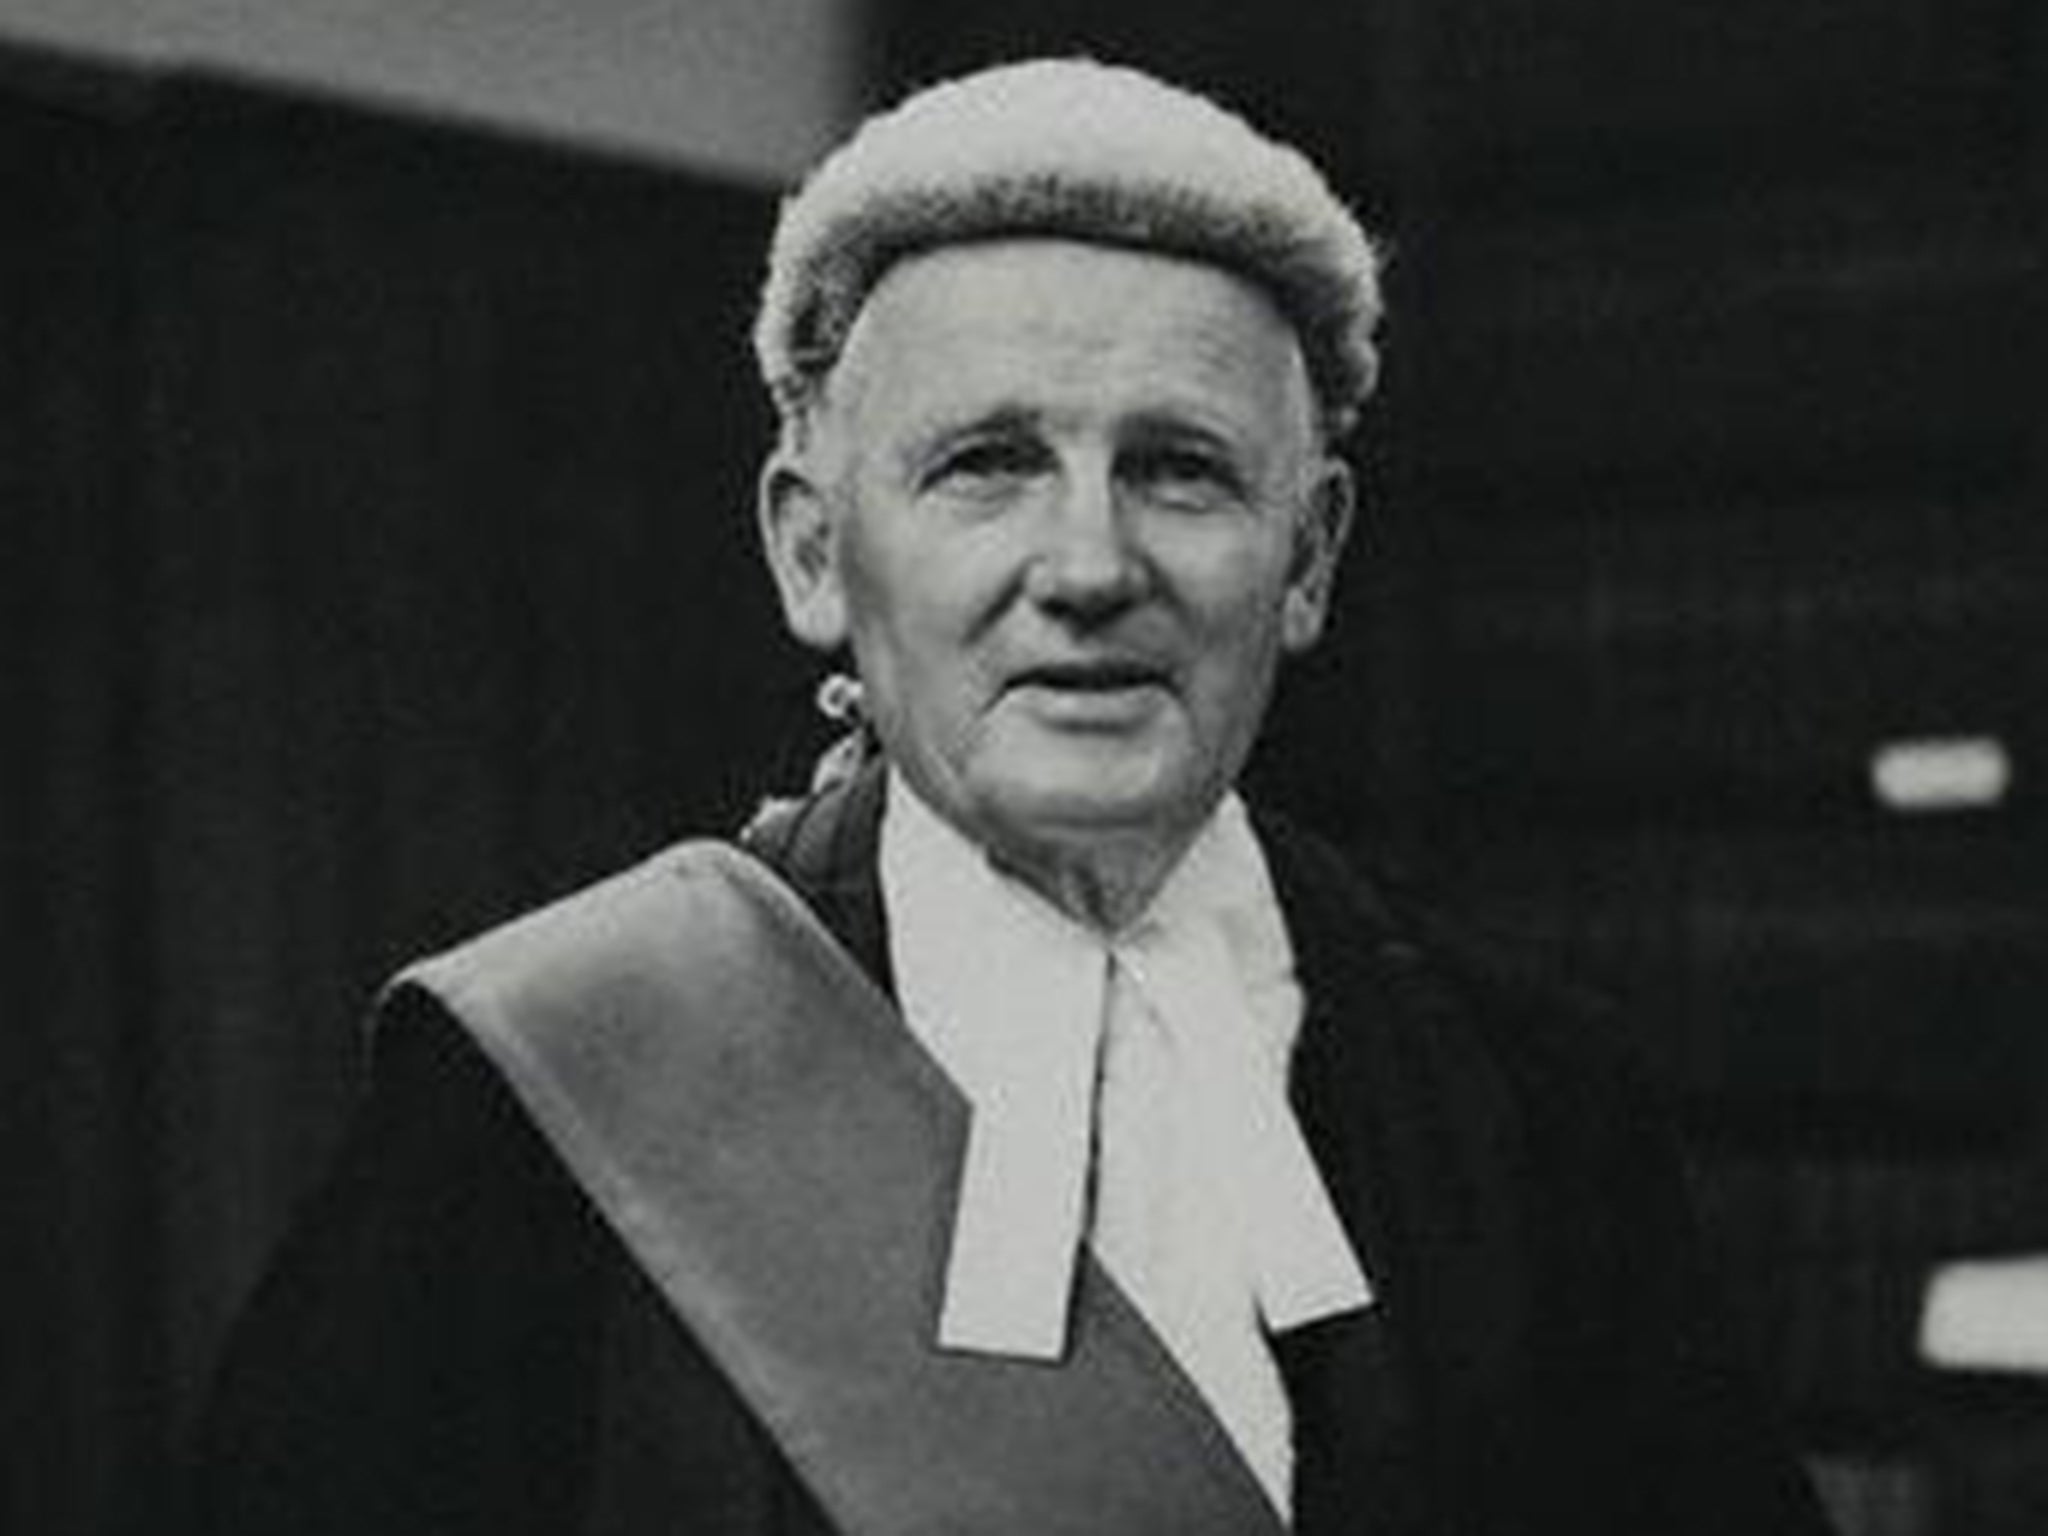 Kim Philby's interrogator, Helenus Milmo, was part of the prosecution team at the Nuremberg trials